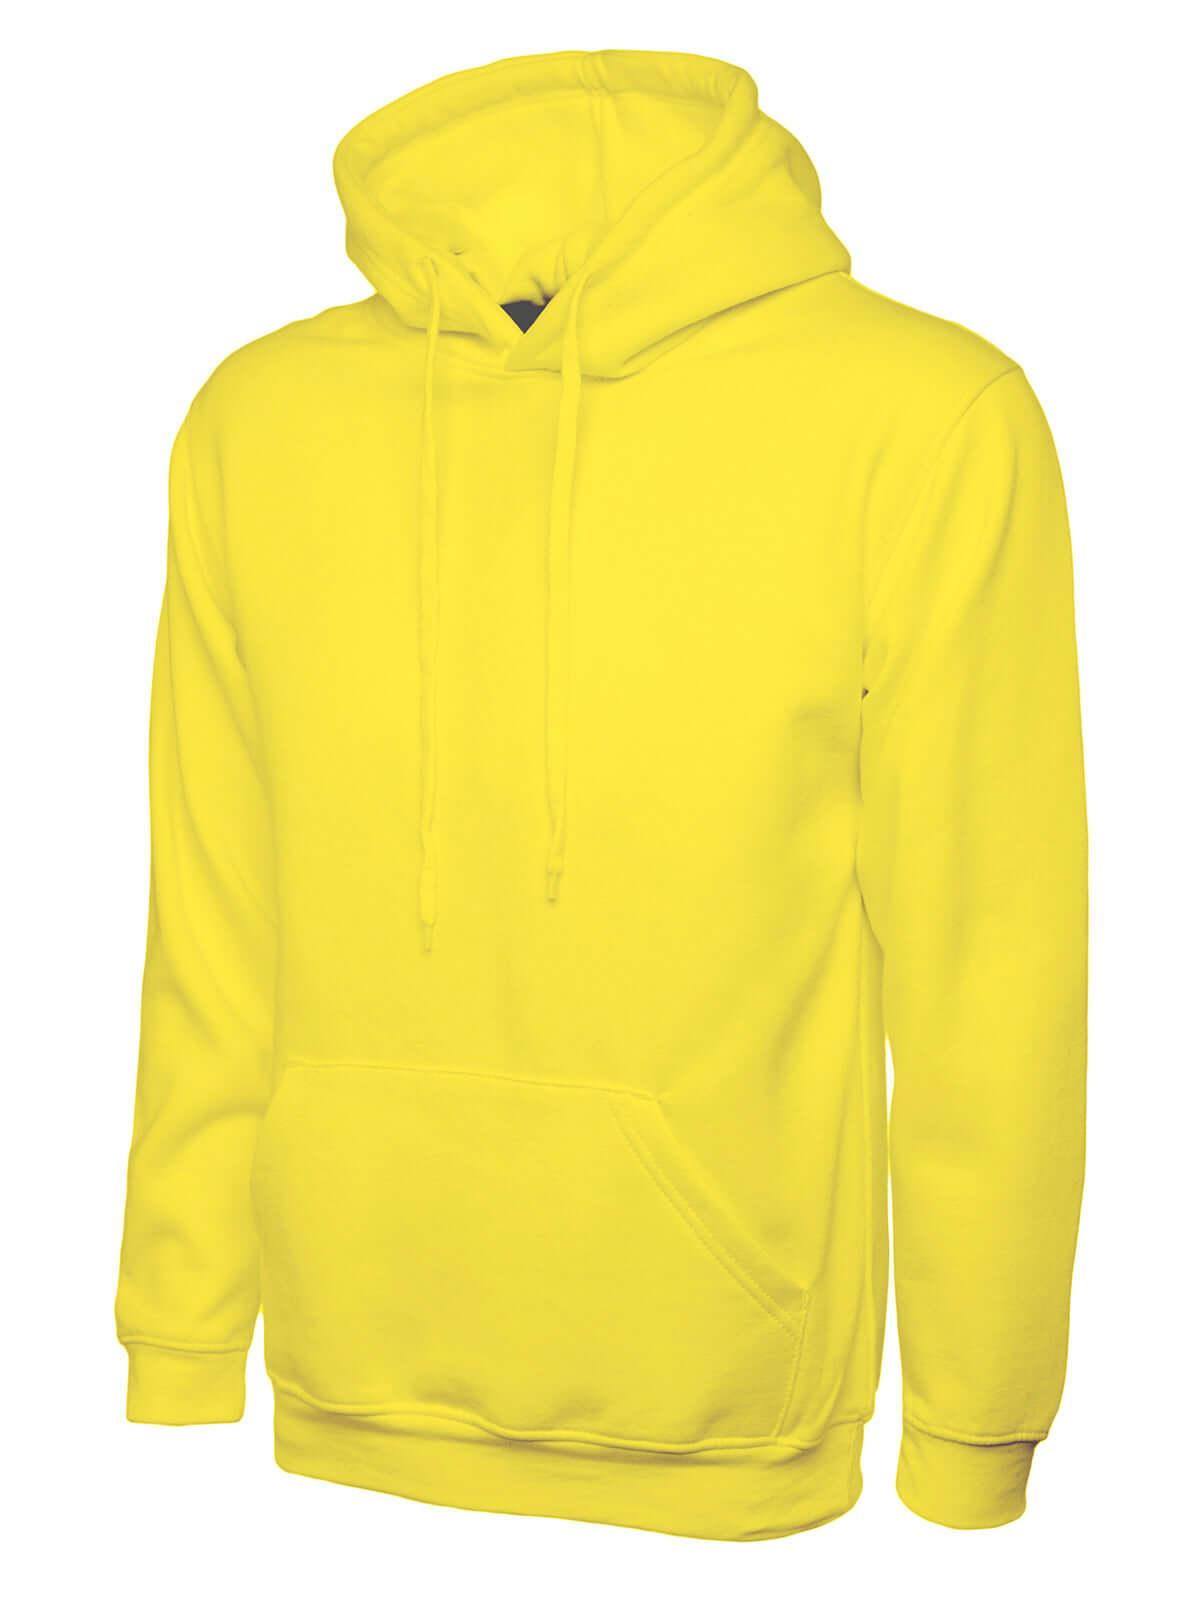 Pegasus Uniform Classic Hooded Sweatshirt - Yellow